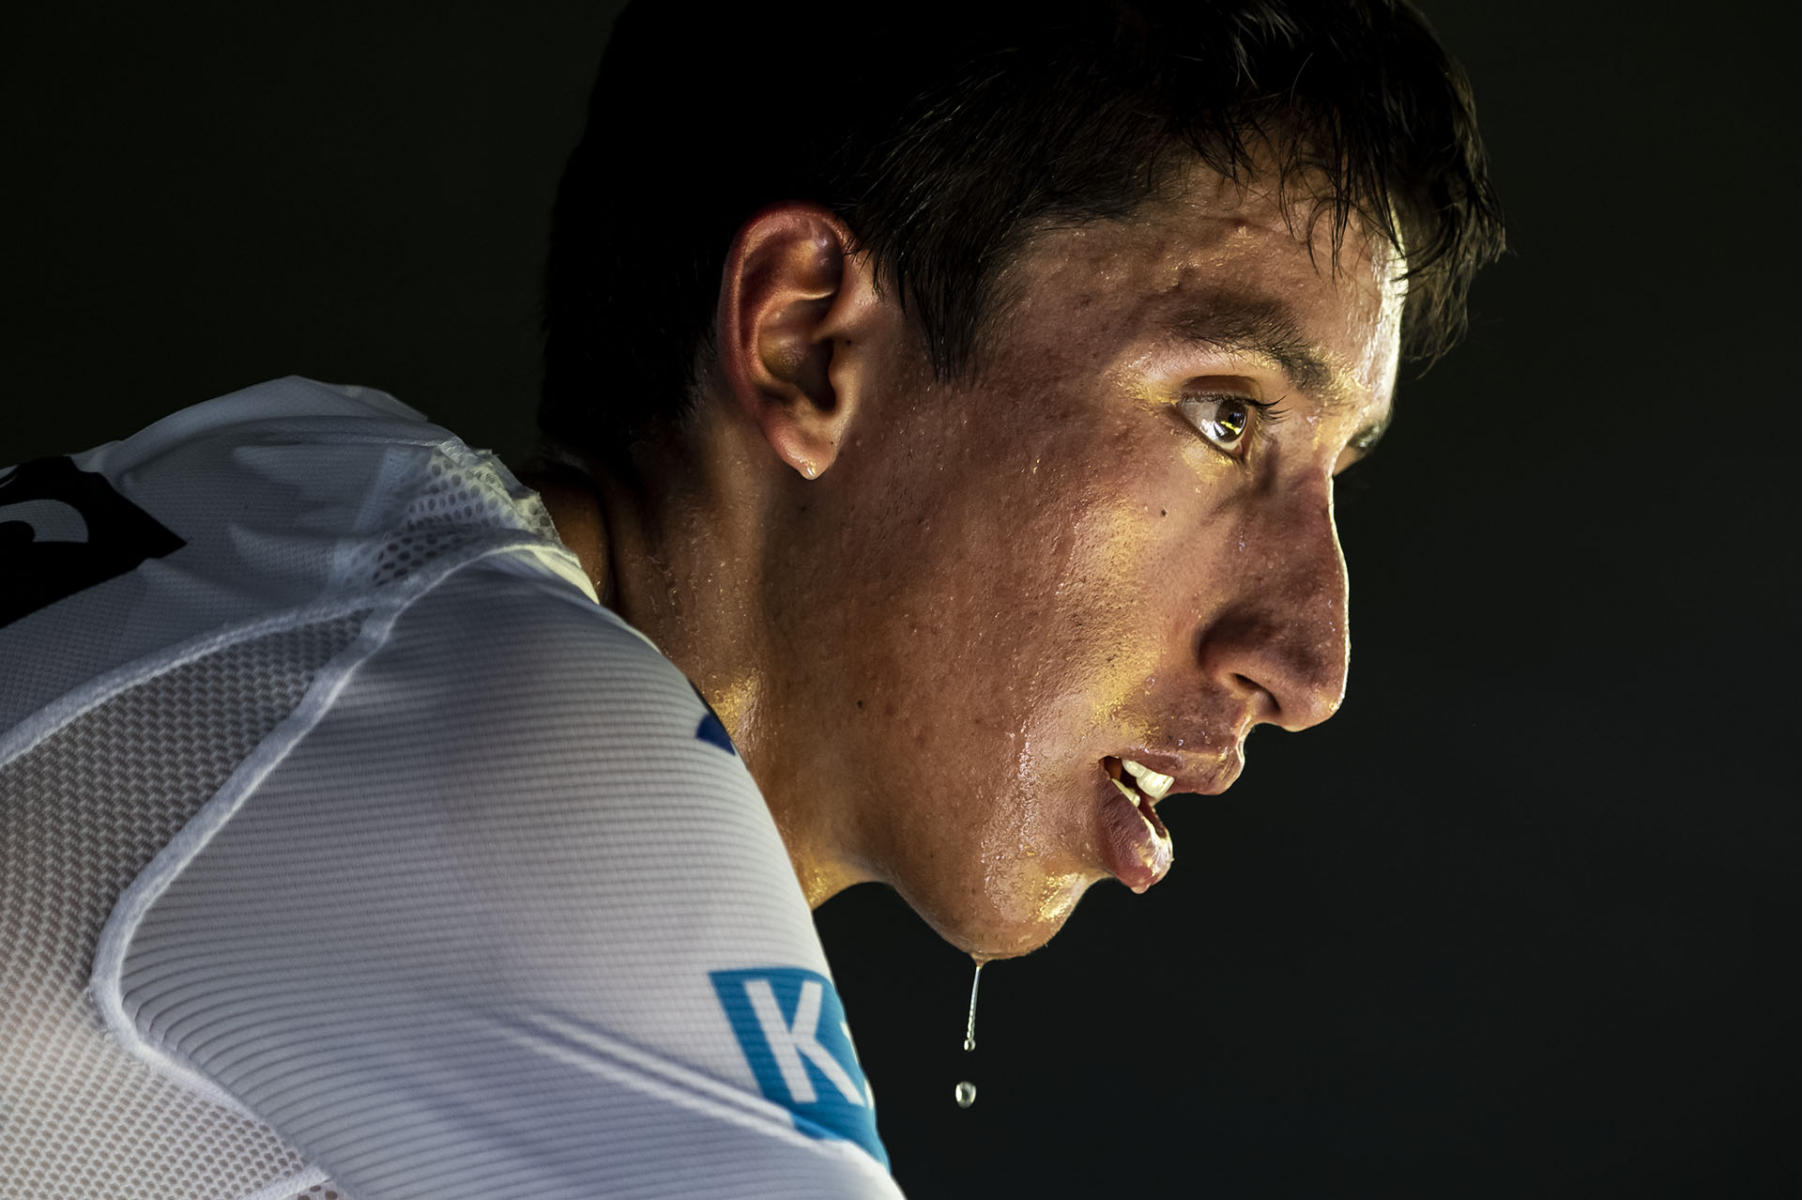 Tour de France 2019 - Stage Eleven - Egan Bernal cools down after the stage